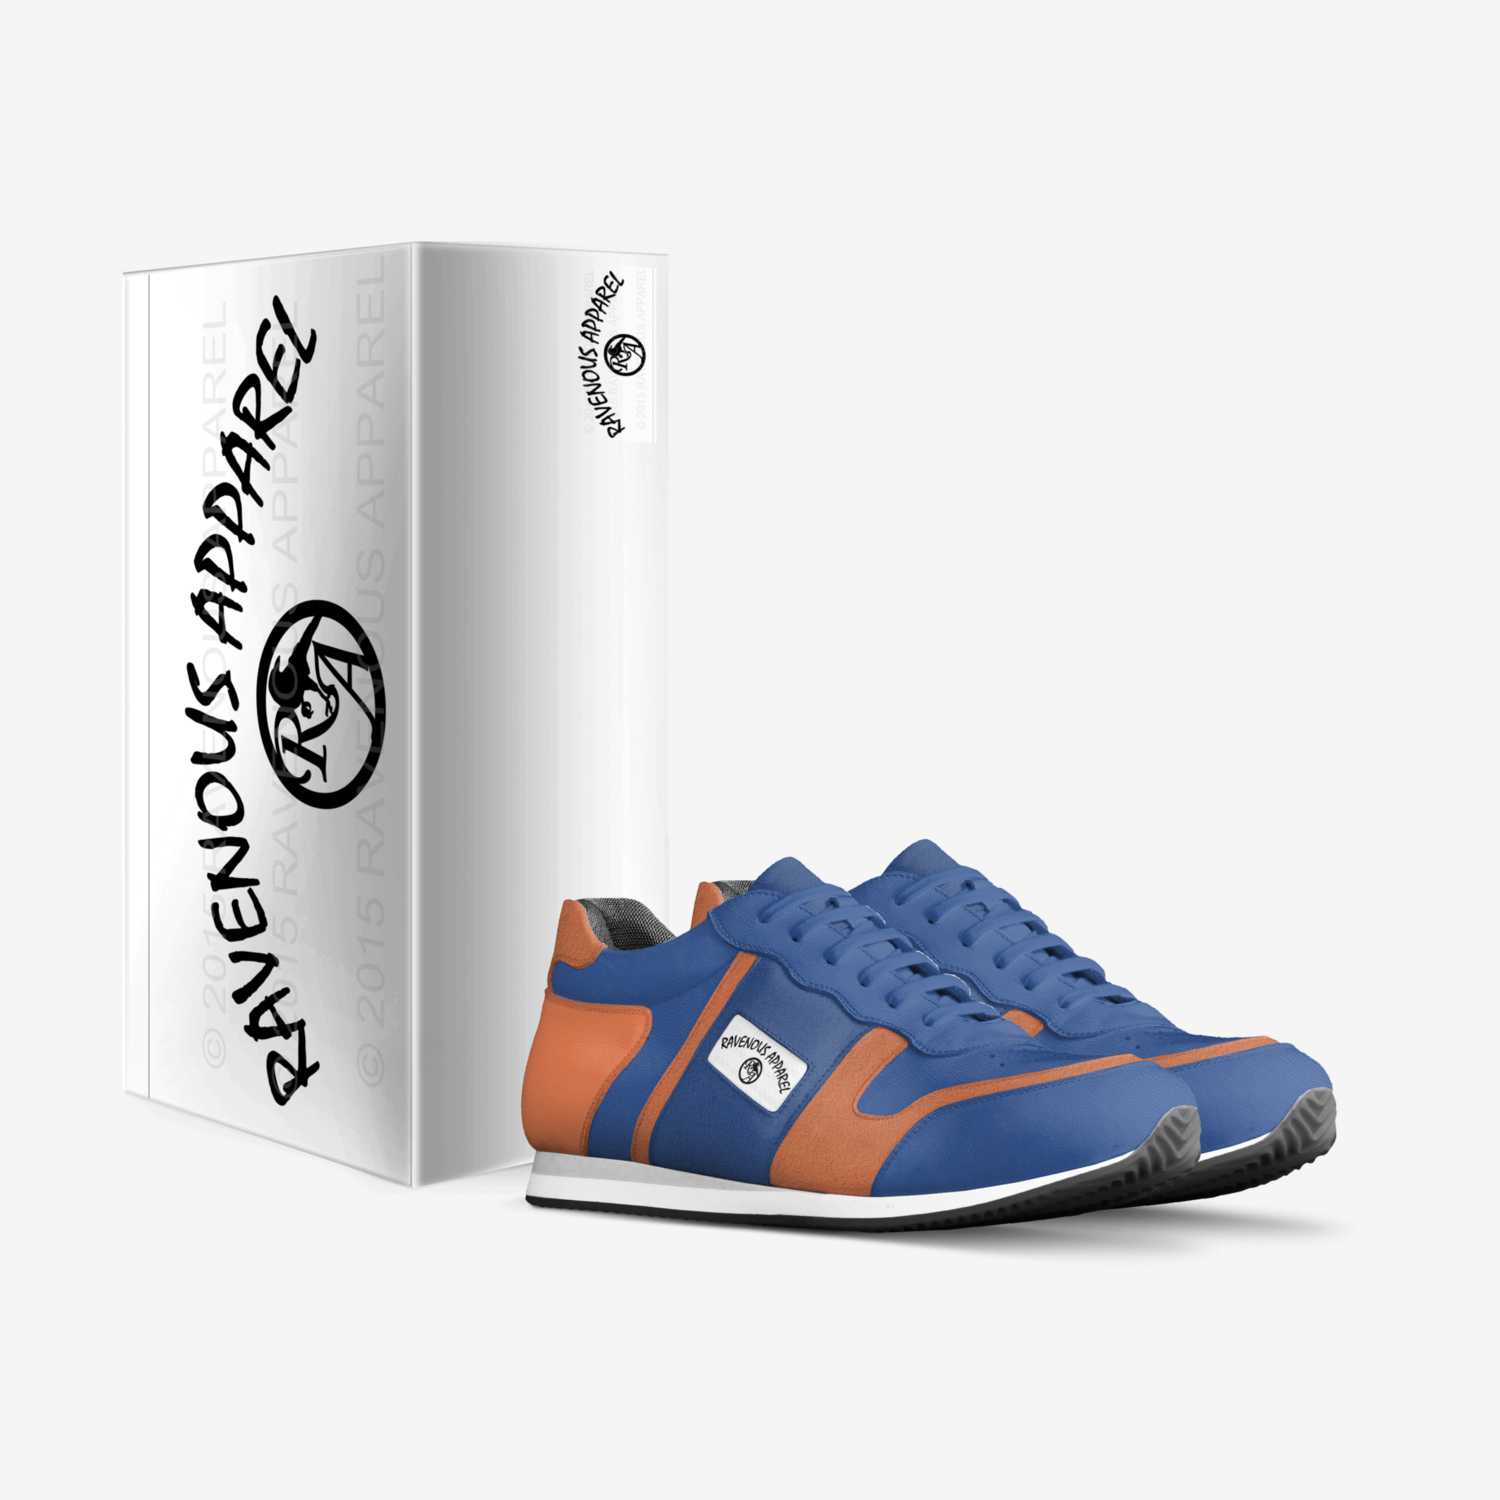 RAKM custom made in Italy shoes by Thomas Rodriguez | Box view